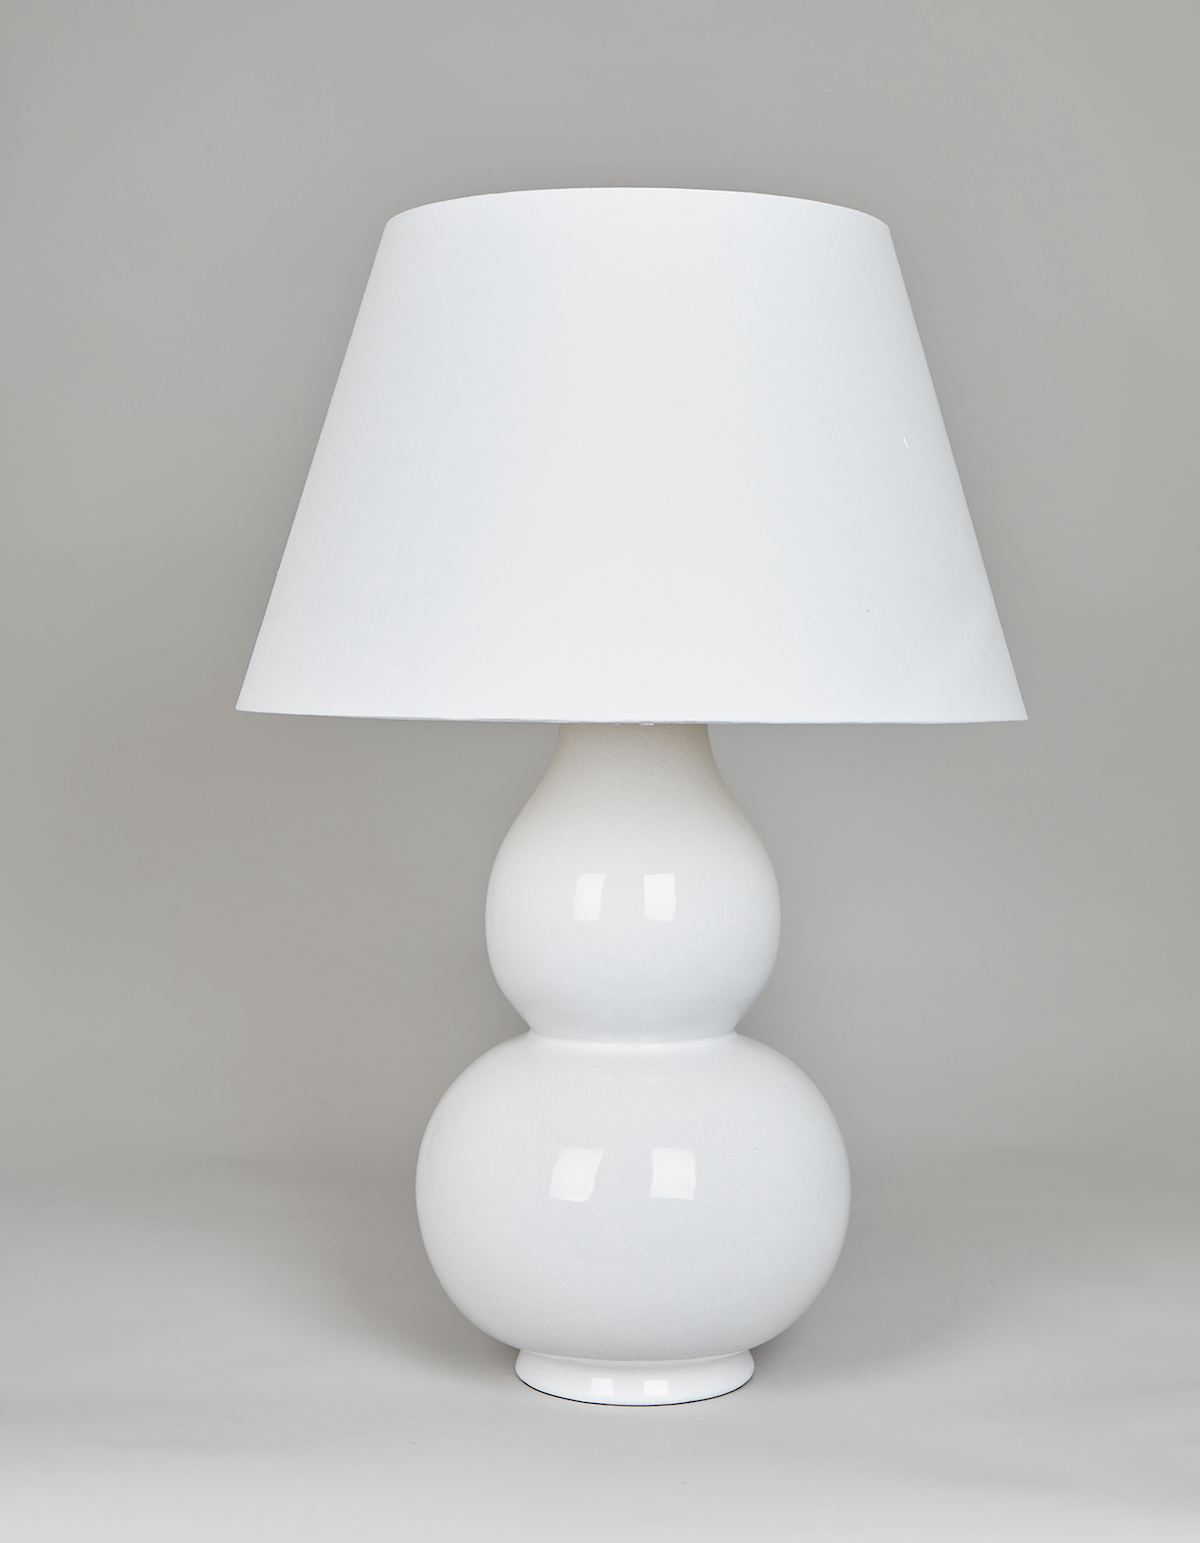 Image caption: Avebury Table Lamp | Image credit: Vaughan